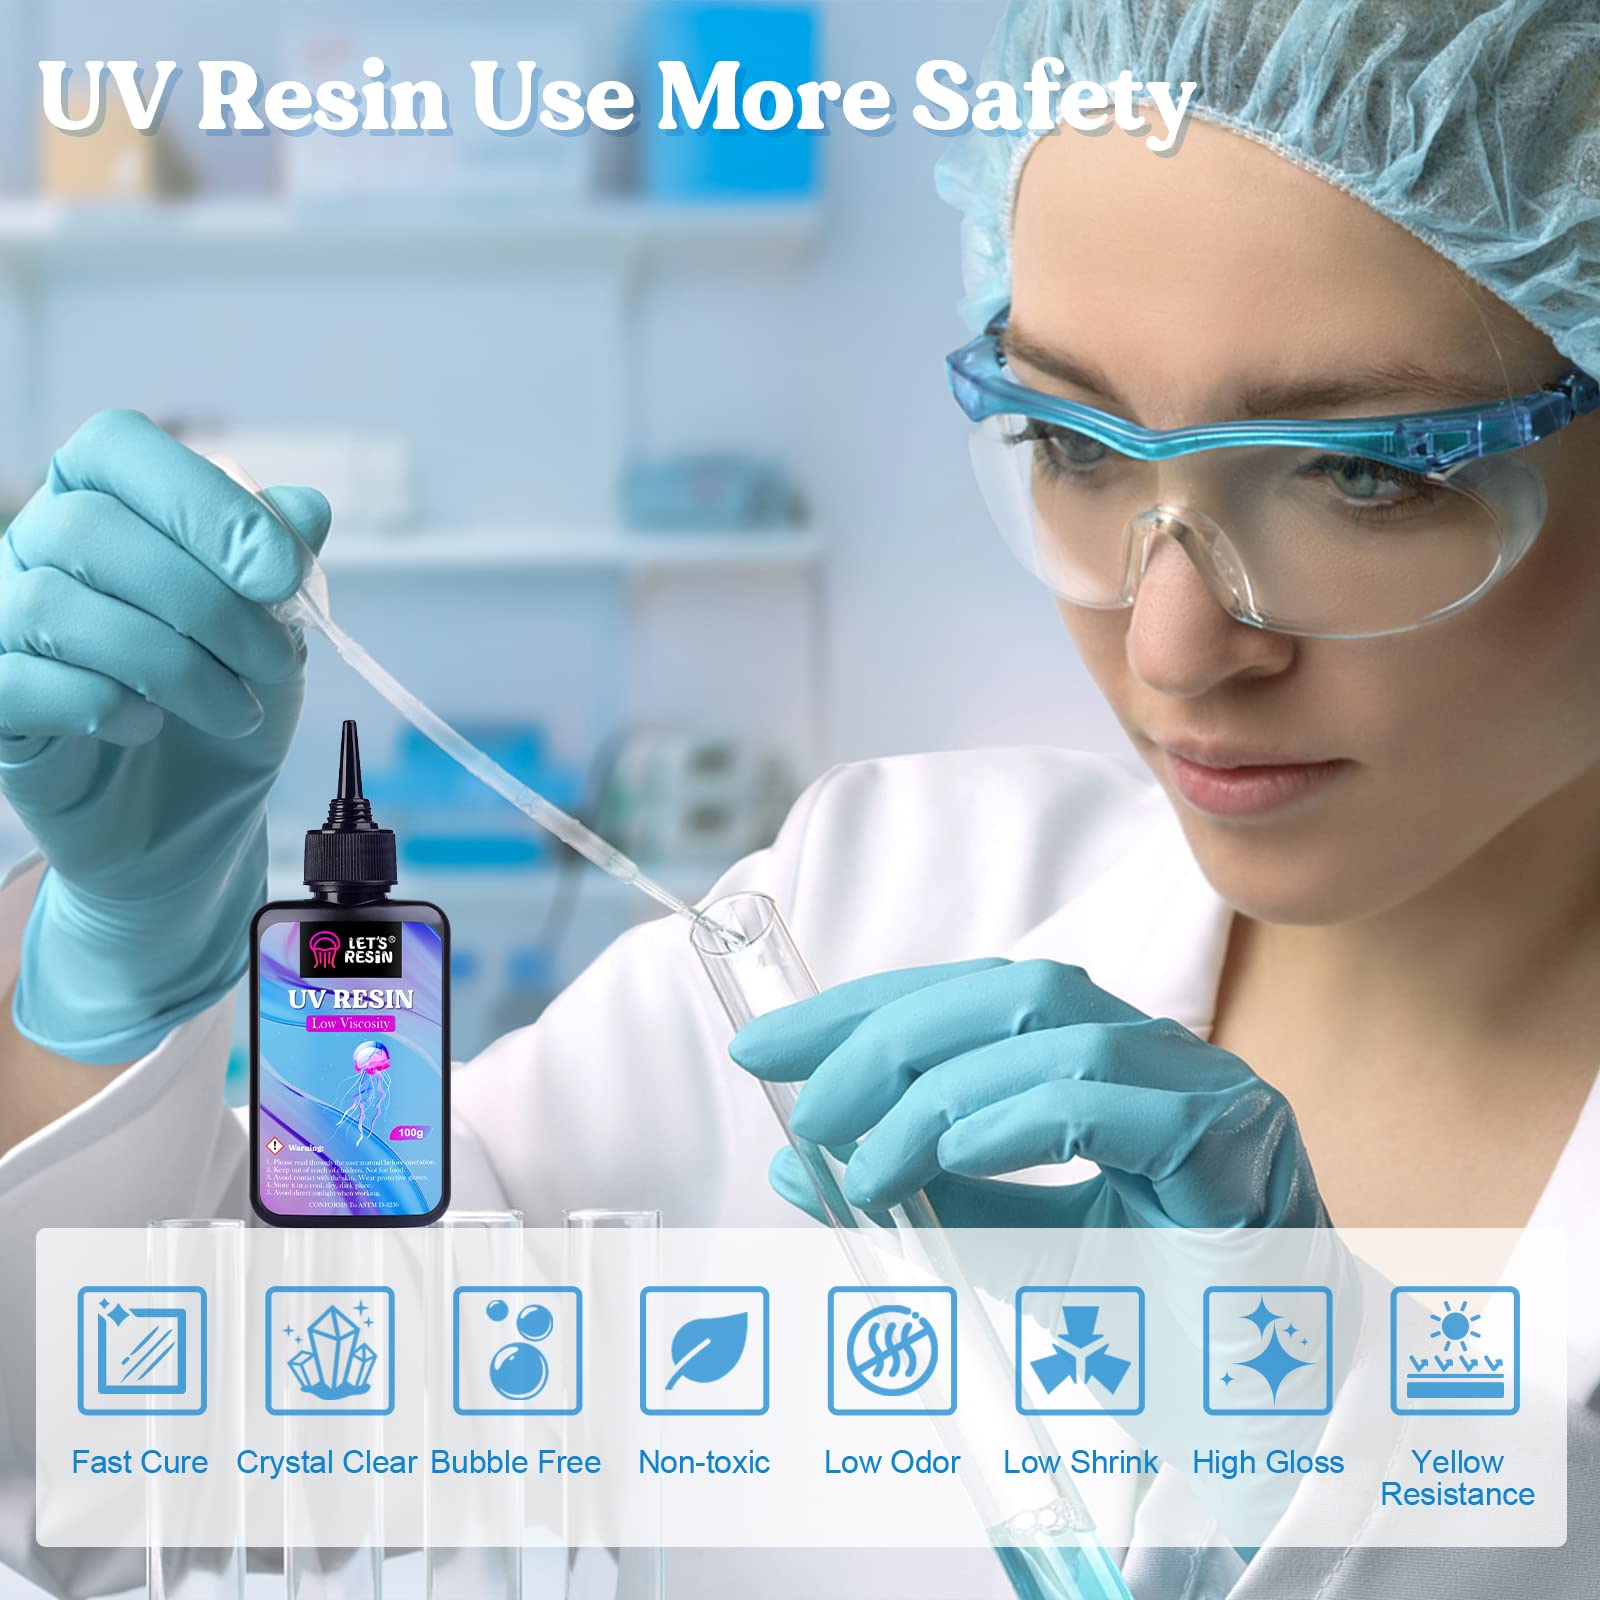 UV Resin | Handcrafter | Microfleur 100g